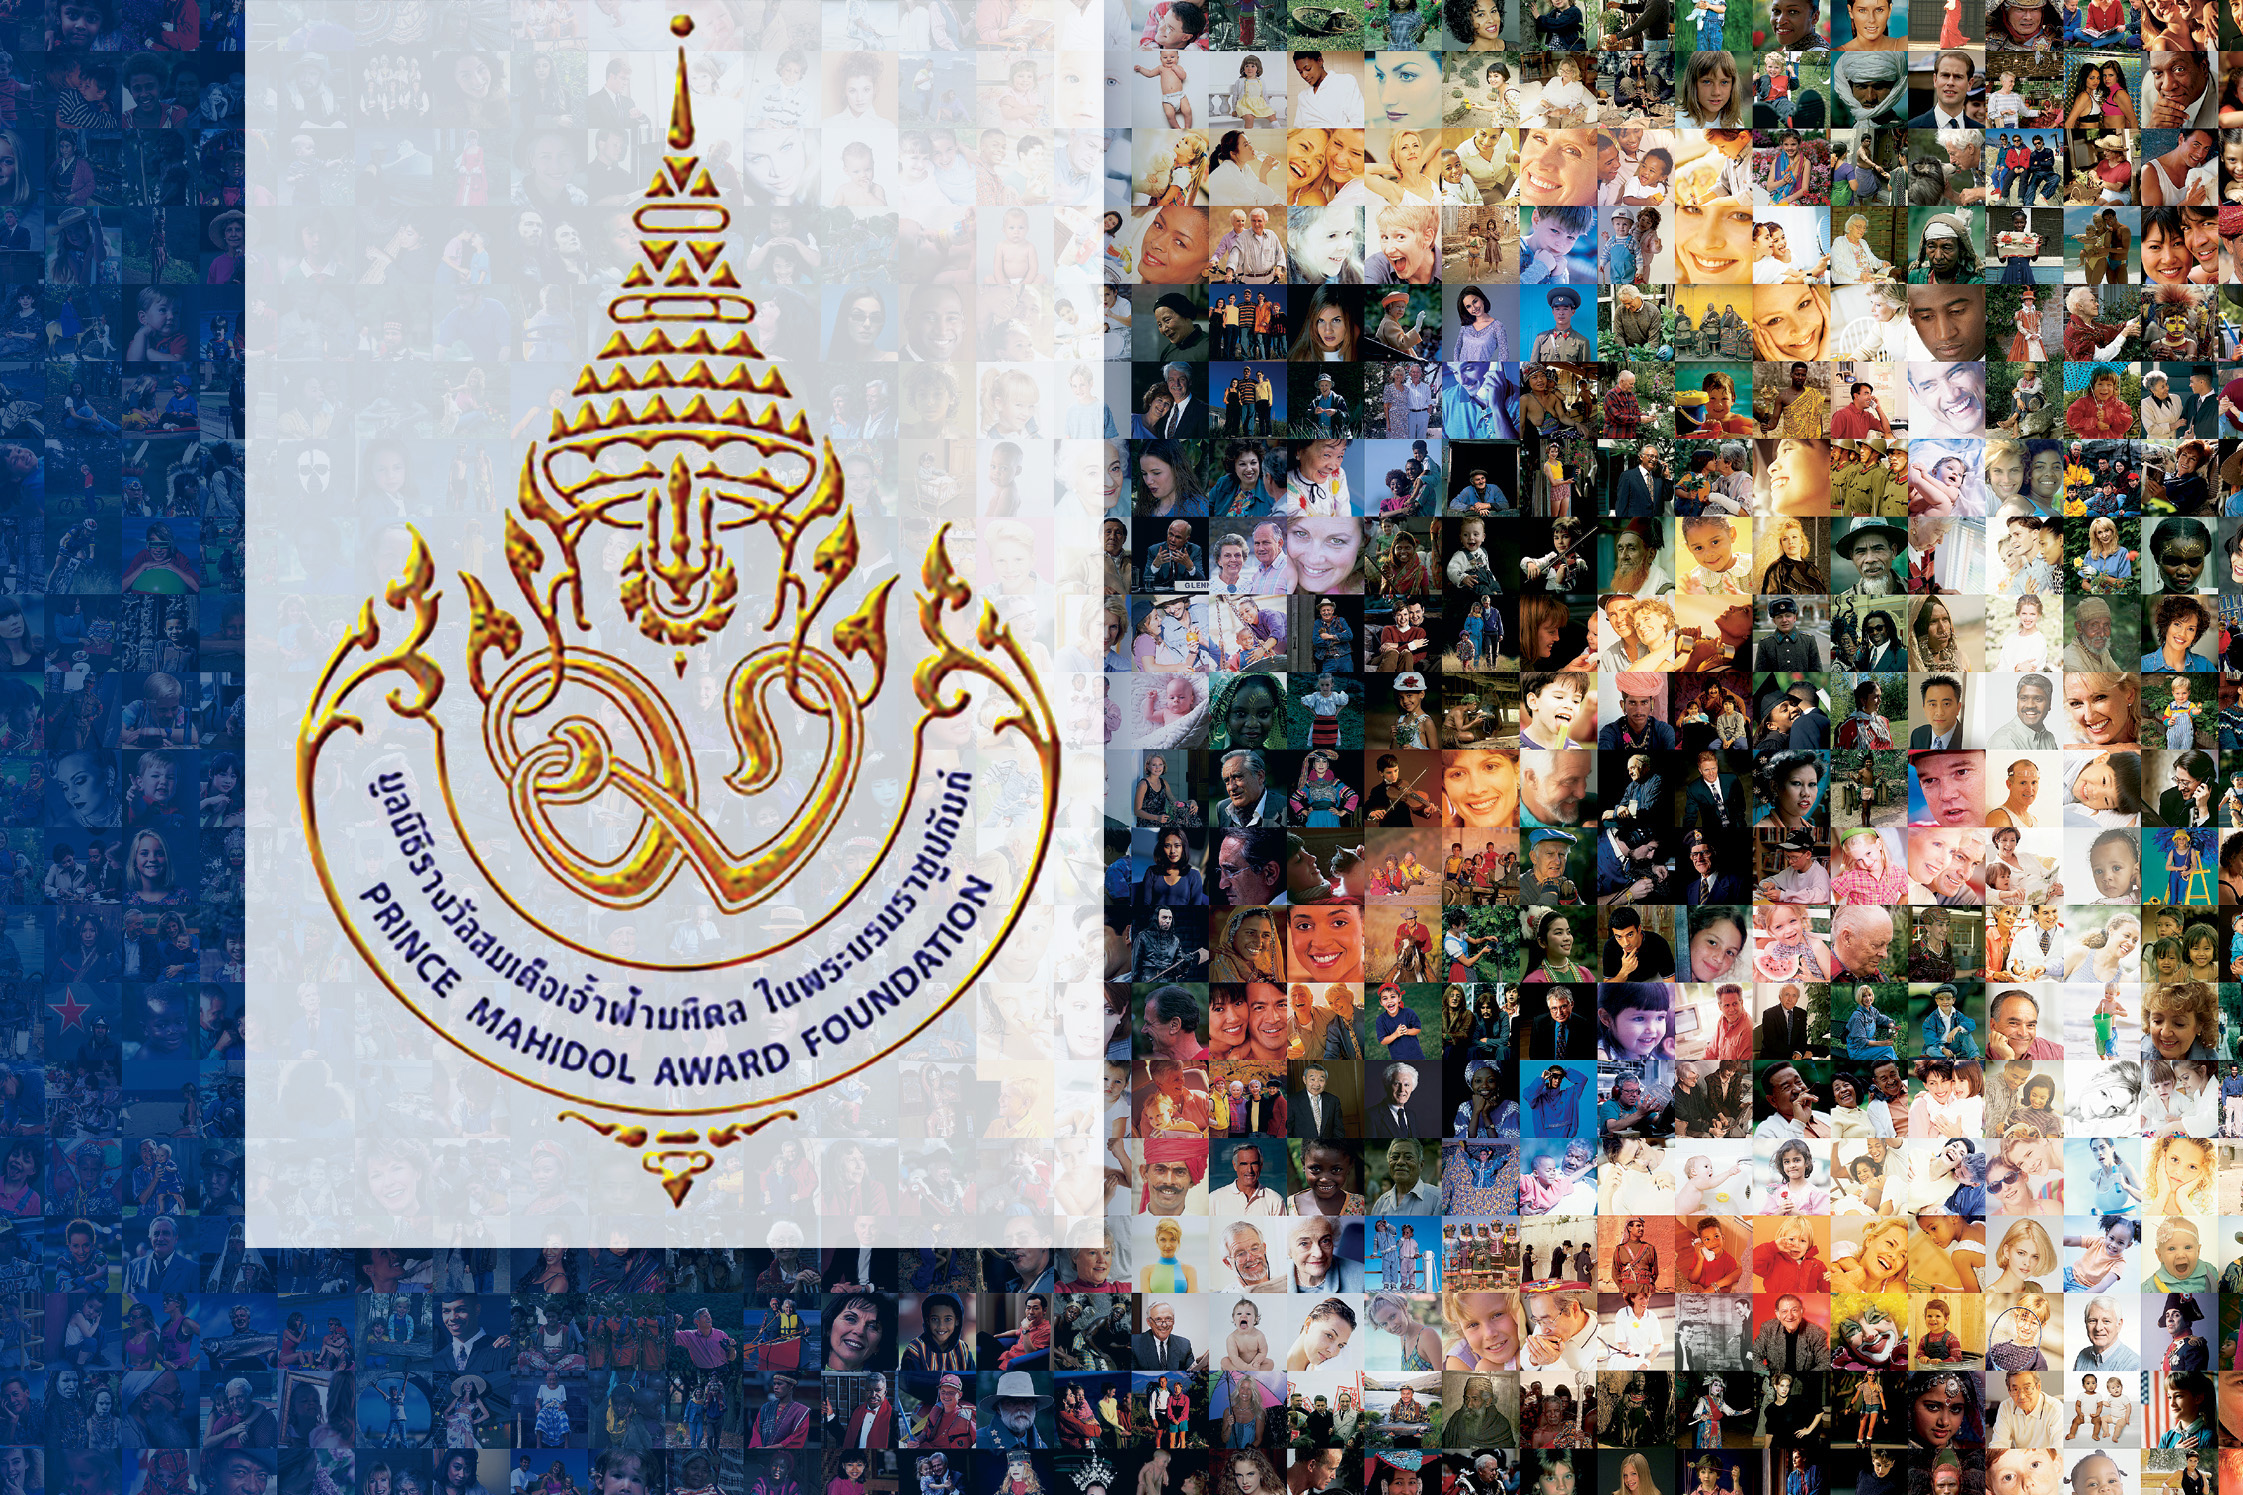 Image of The Prince Mahidol Award Foundation logo overlaid onto a double helix